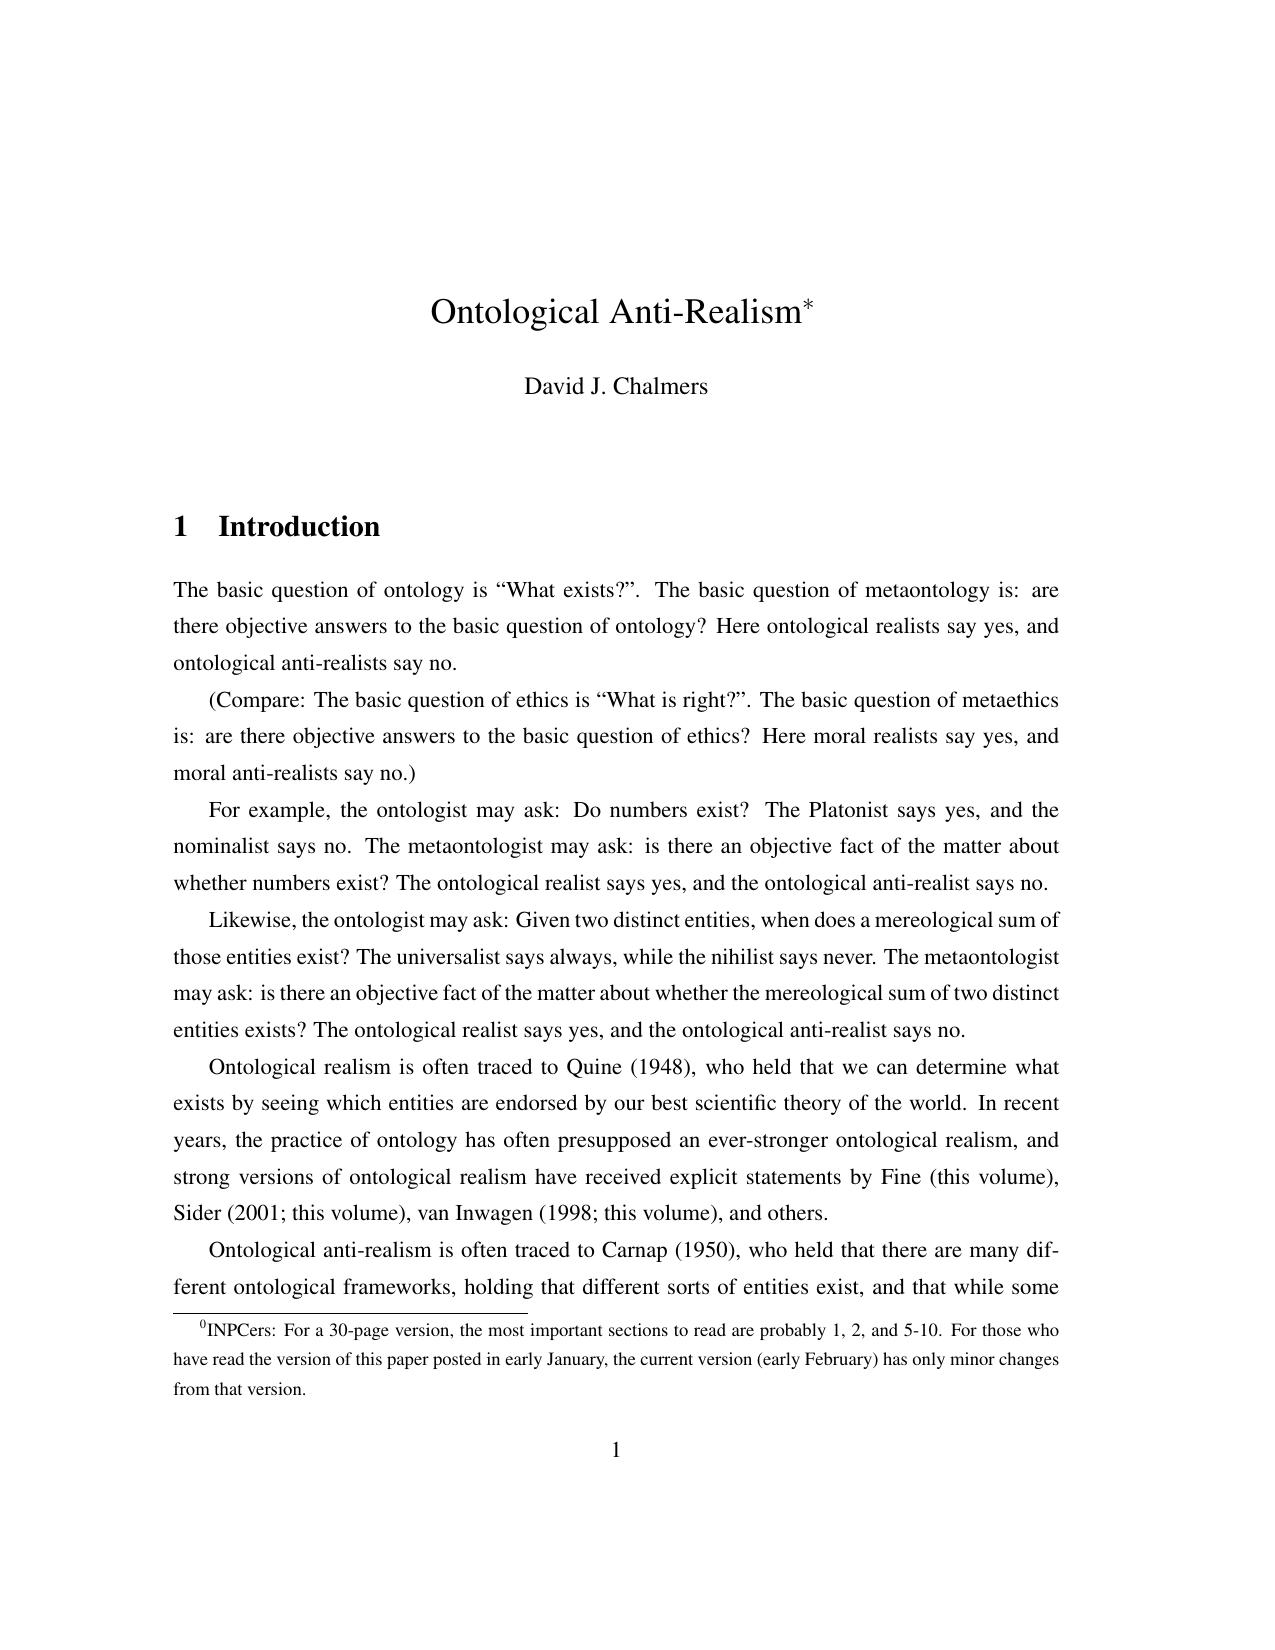 Ontological Anti-Realism (Essay)